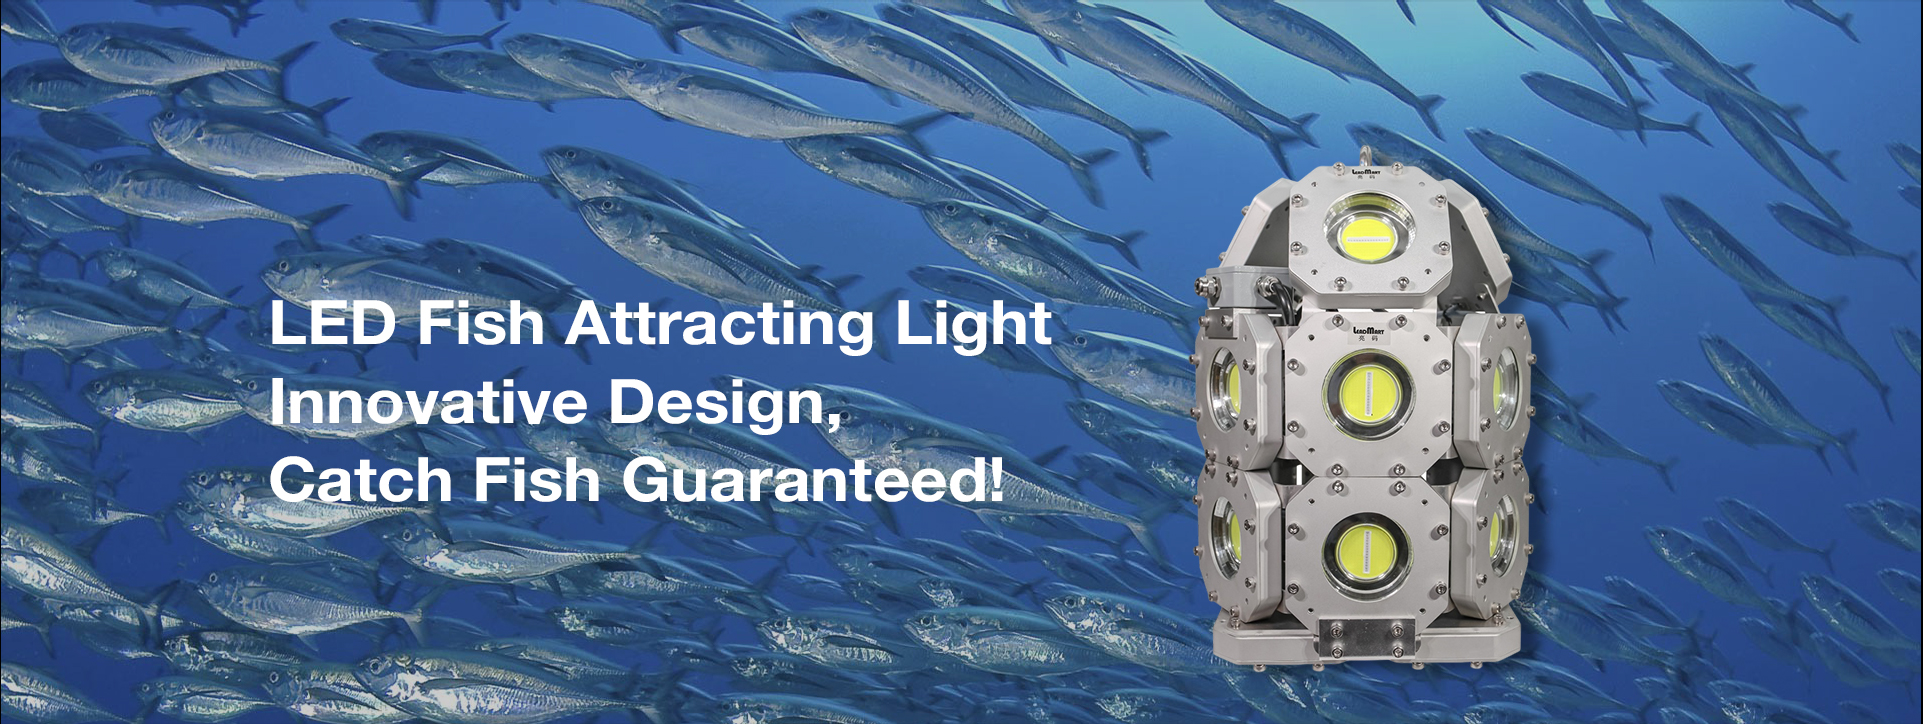 LED Fish-attracting Lights